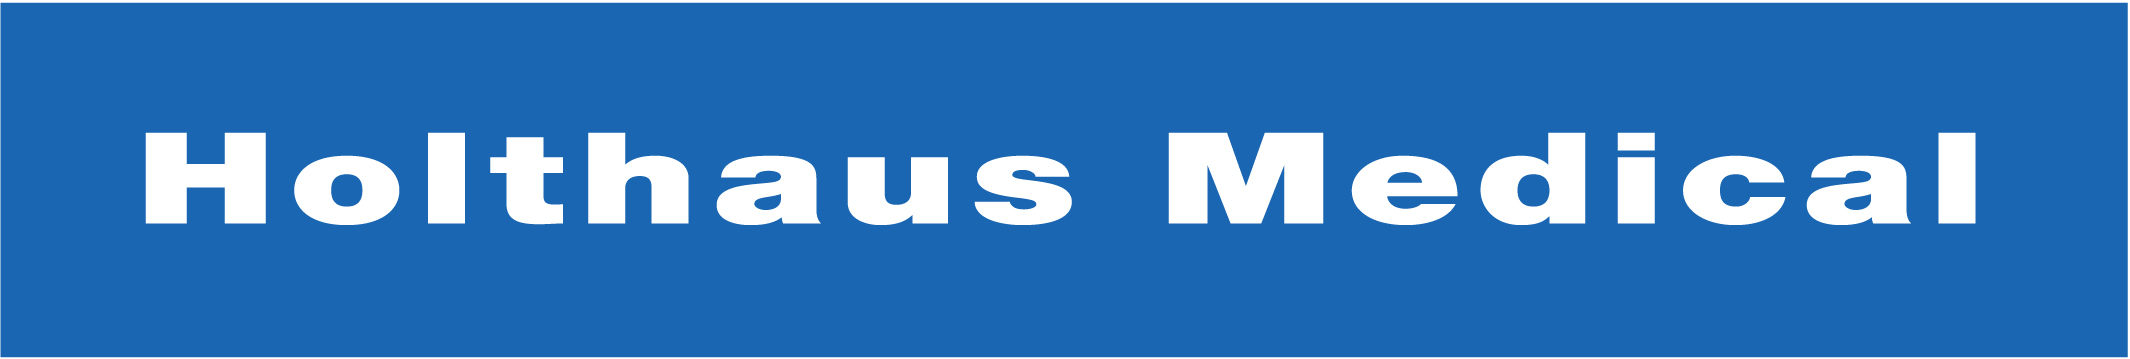 Holthaus Medical GmbH & Co.KG